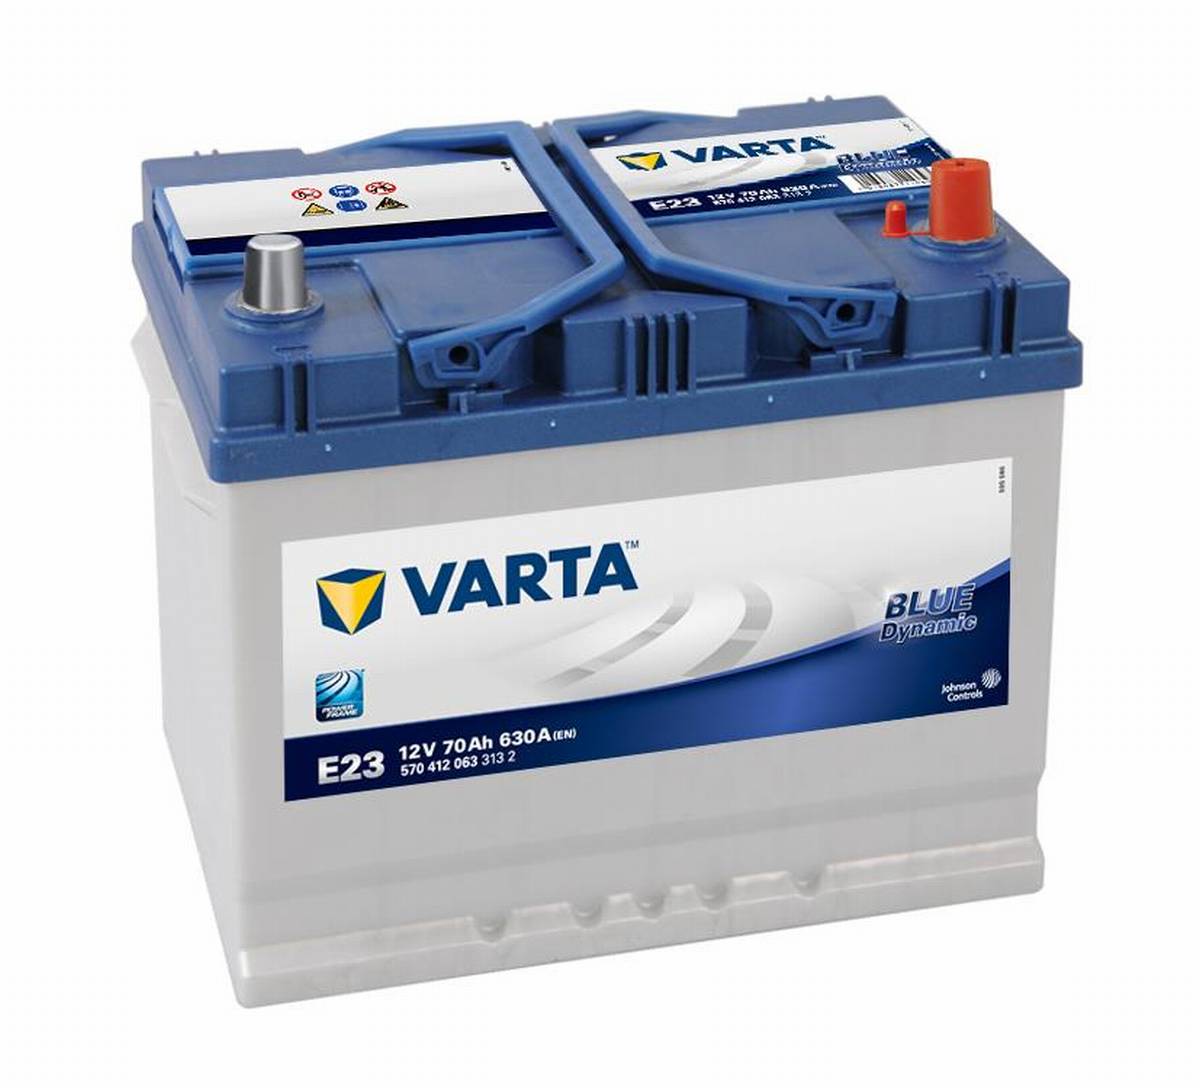 Stressvol titel maandelijks Varta BLUE Dynamic 570 412 063 3132 E23 12V 70Ah 630A/EN car battery |  Starter batteries | Boots & Marine | Batteries by application |  Akkusys.Shop International